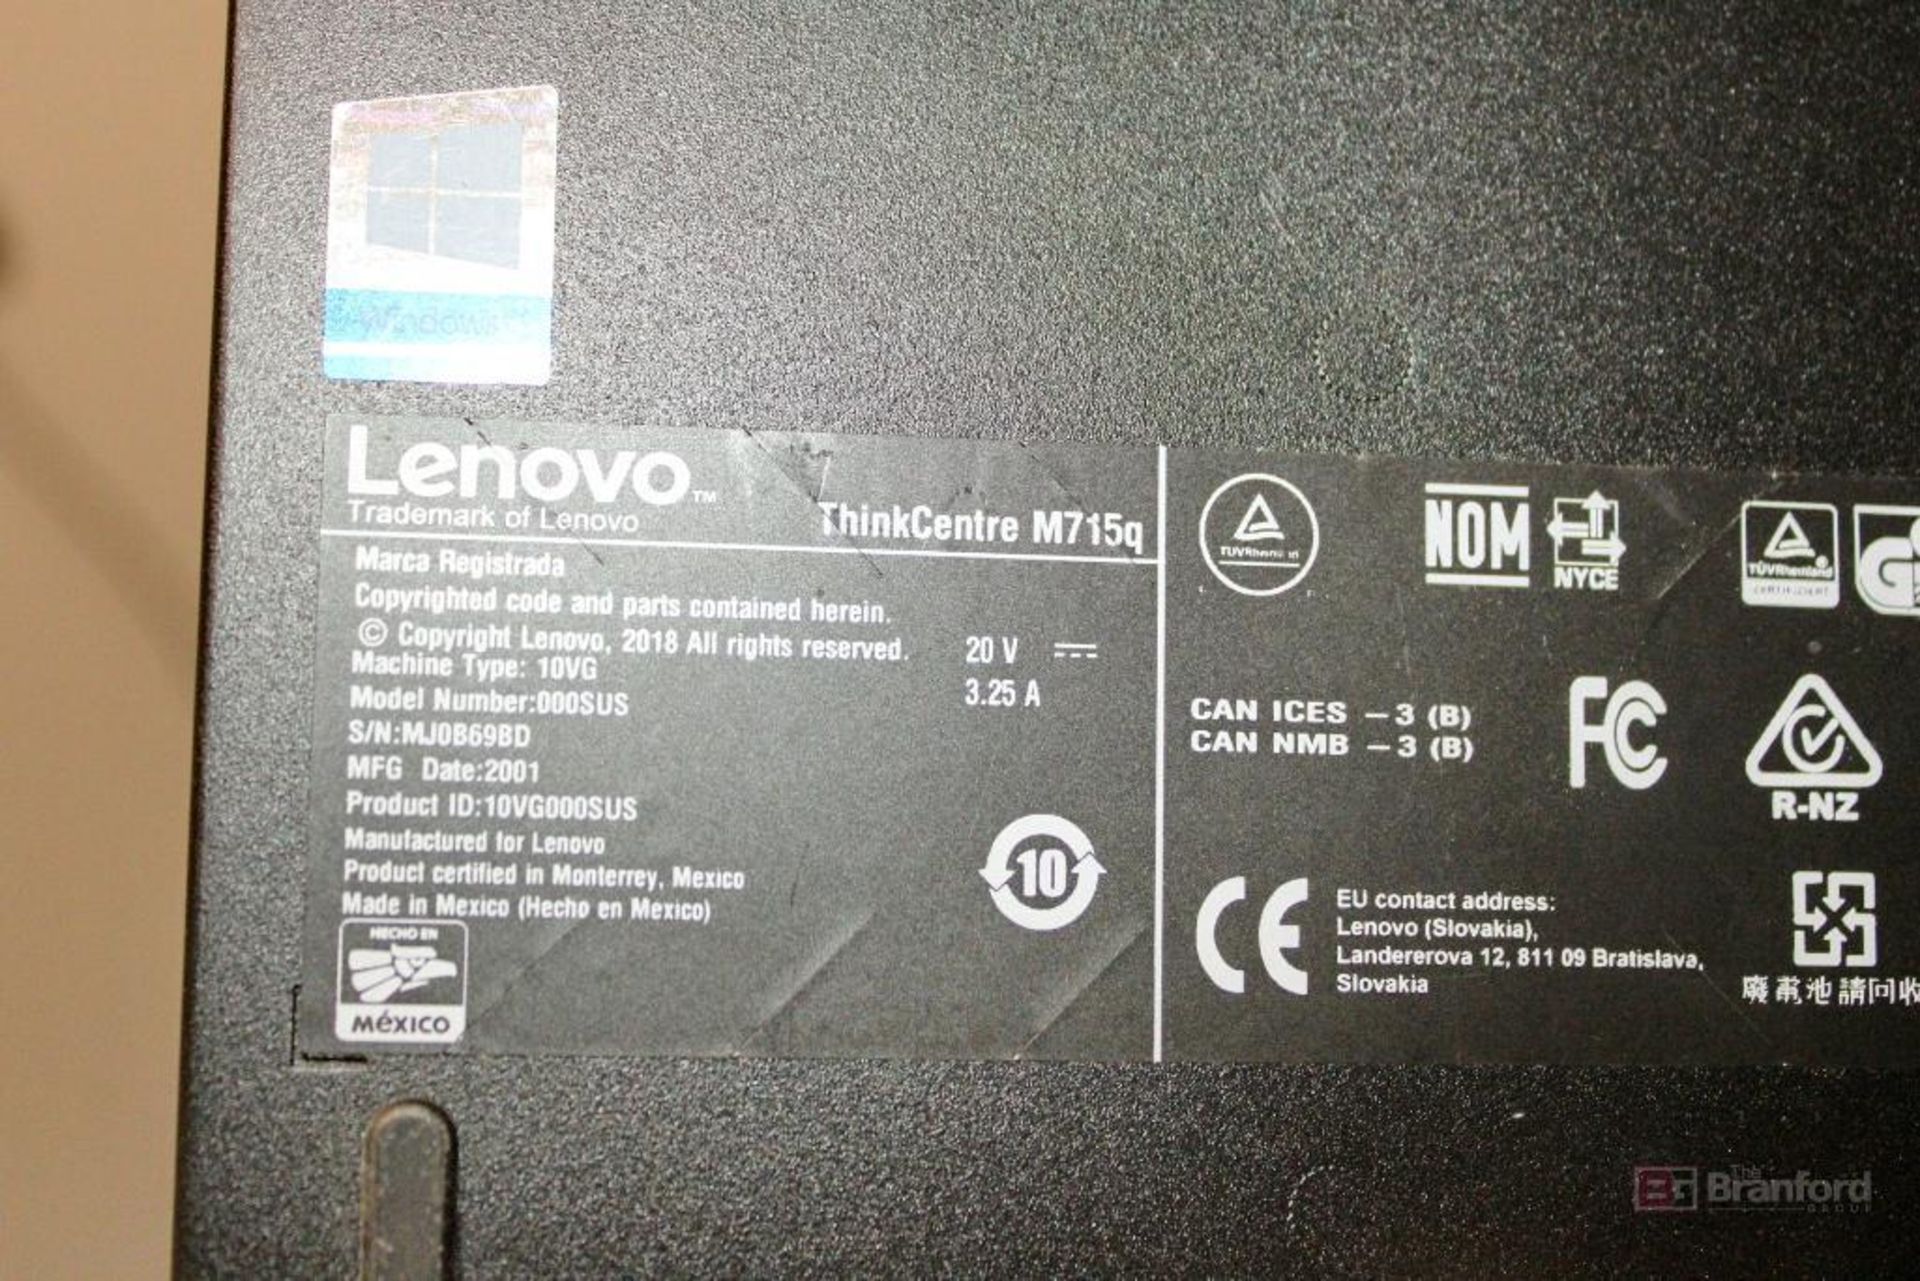 (14) ThinkCentre M715q Desktop PC, By Lenovo - Image 3 of 4